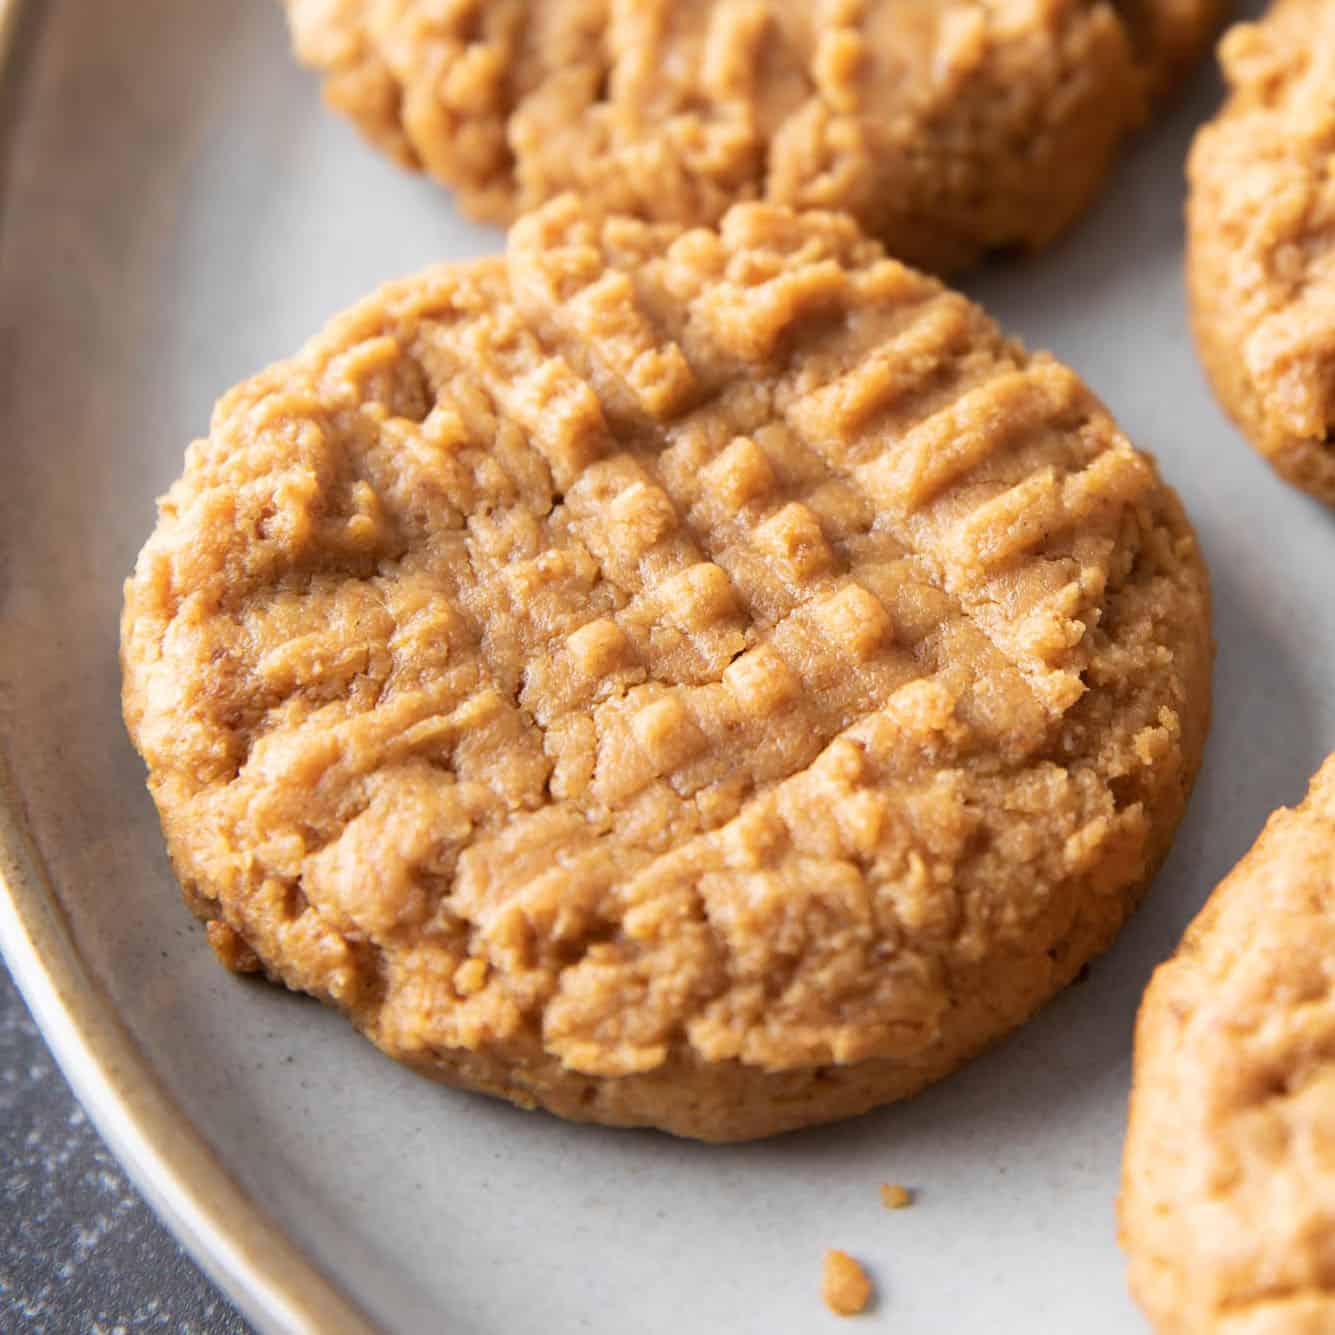 35+ Best Vegan Cookie Recipes: amazingly tasty vegan cookies everyone will love! Including vegan chocolate chip cookies, vegan peanut butter cookies, vegan oatmeal cookies and more! #Vegan #VeganCookie #VeganChocolateChipCookies #VeganDesserts | Recipes at BeamingBaker.com